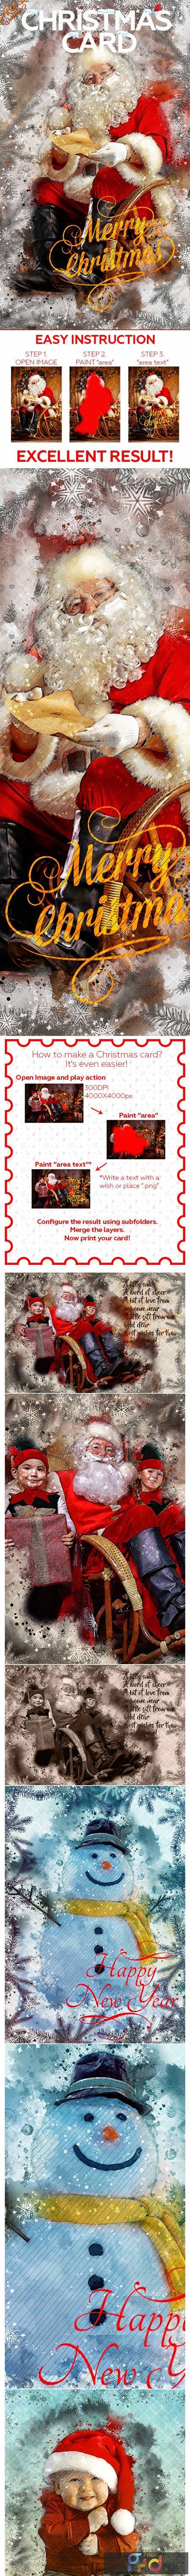 Christmas Card Photoshop Action